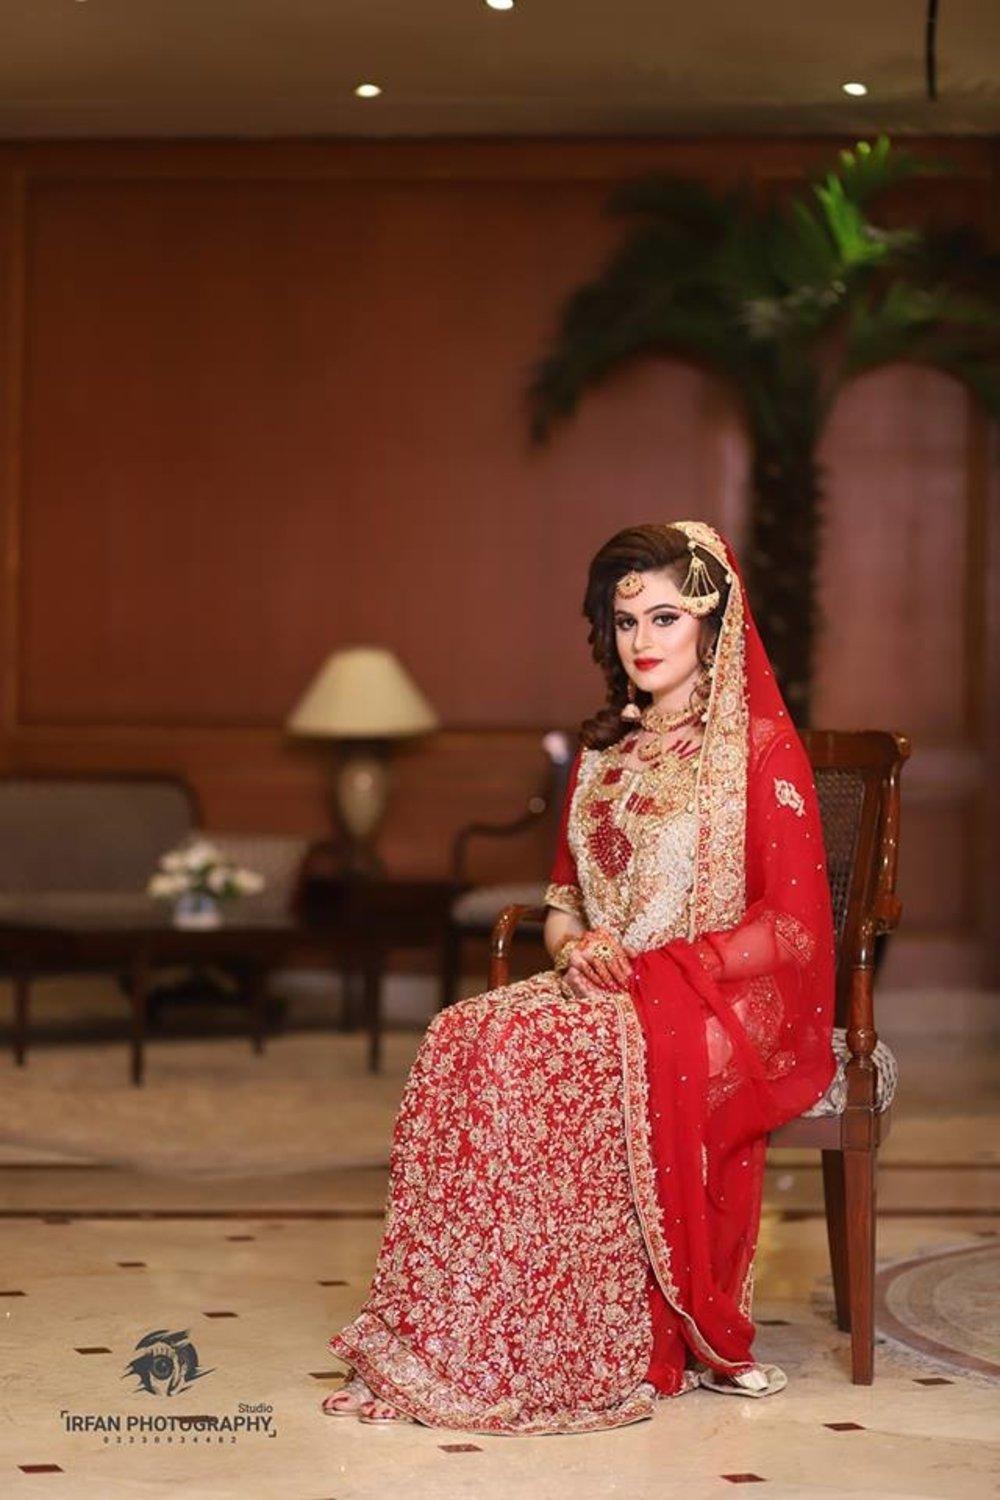 Pin by Amna Kazmi on Wedding pins❤️ | Bridal photoshoot, Bride photoshoot,  Bridal photography poses